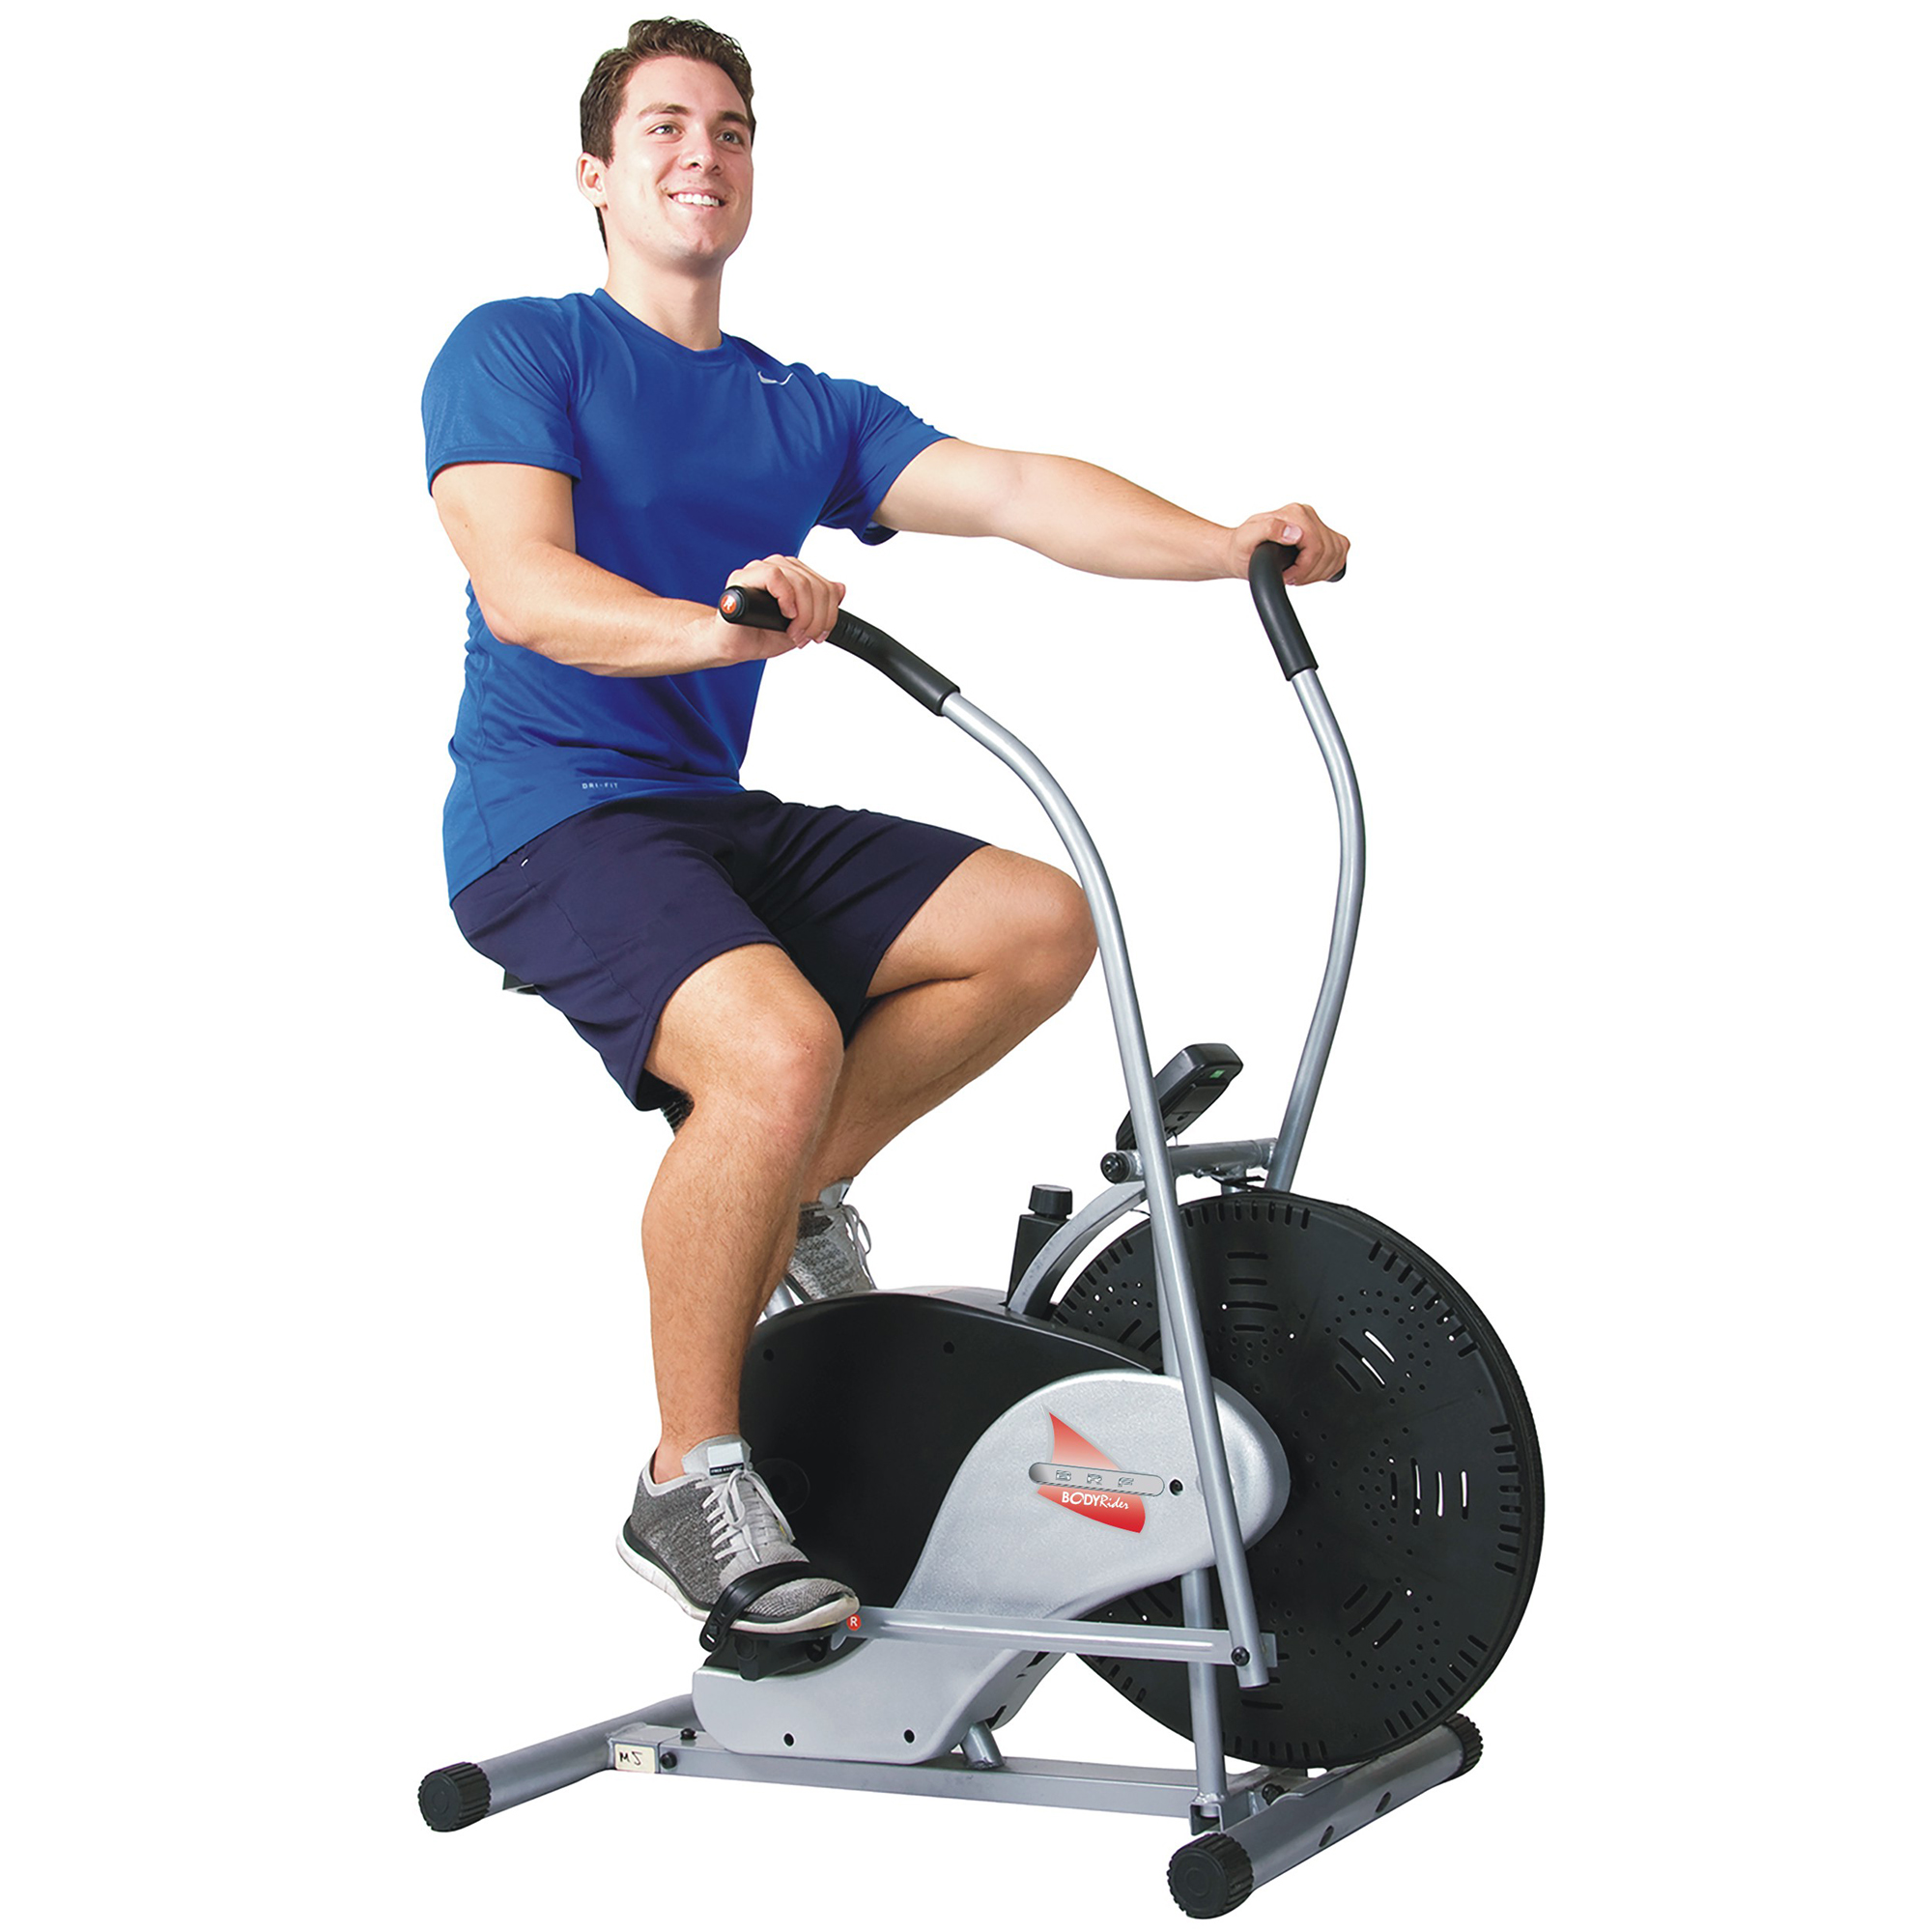 Body Flex Sports Body Rider Stationary Cardio Exercise Upright Fan Bike - image 3 of 9